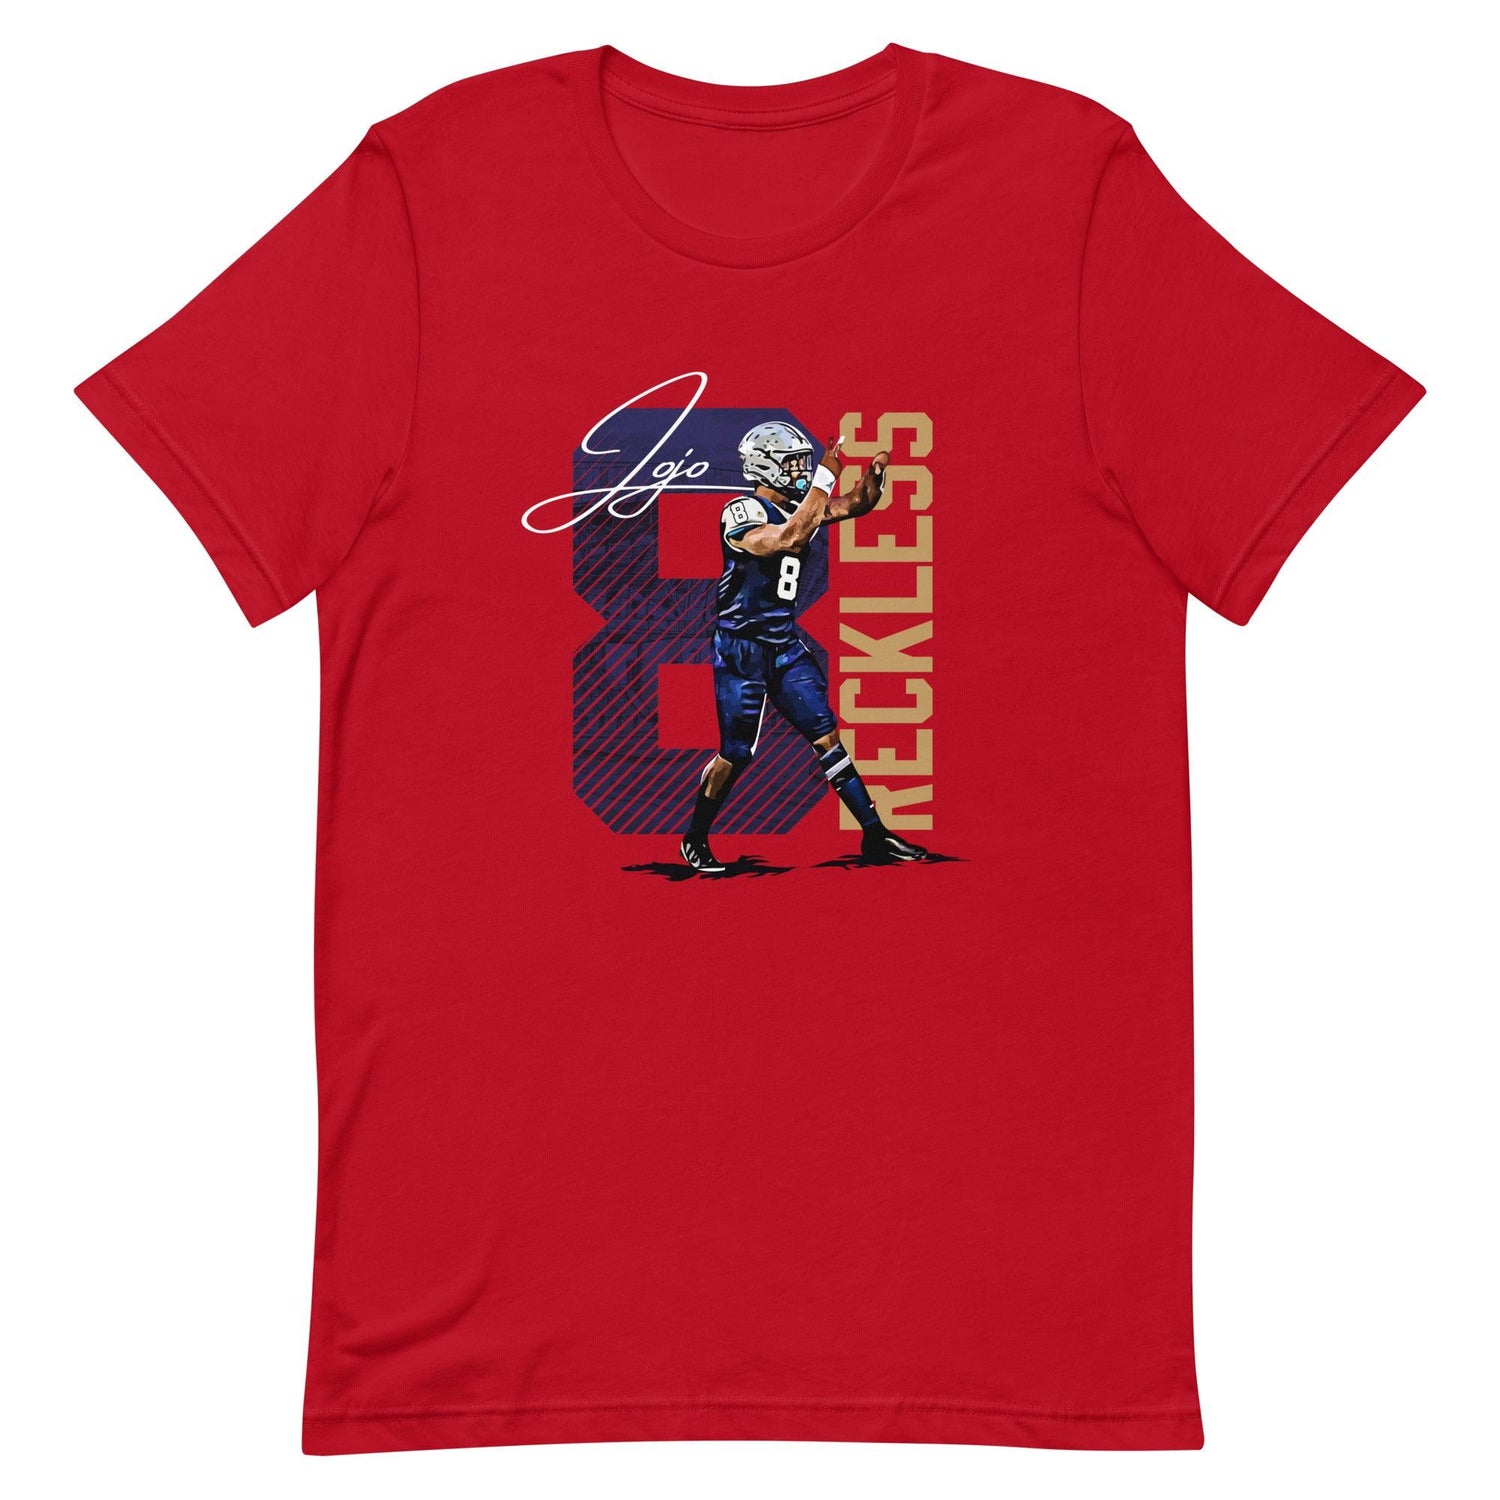 Josiah Silver “Essential” t-shirt - Fan Arch